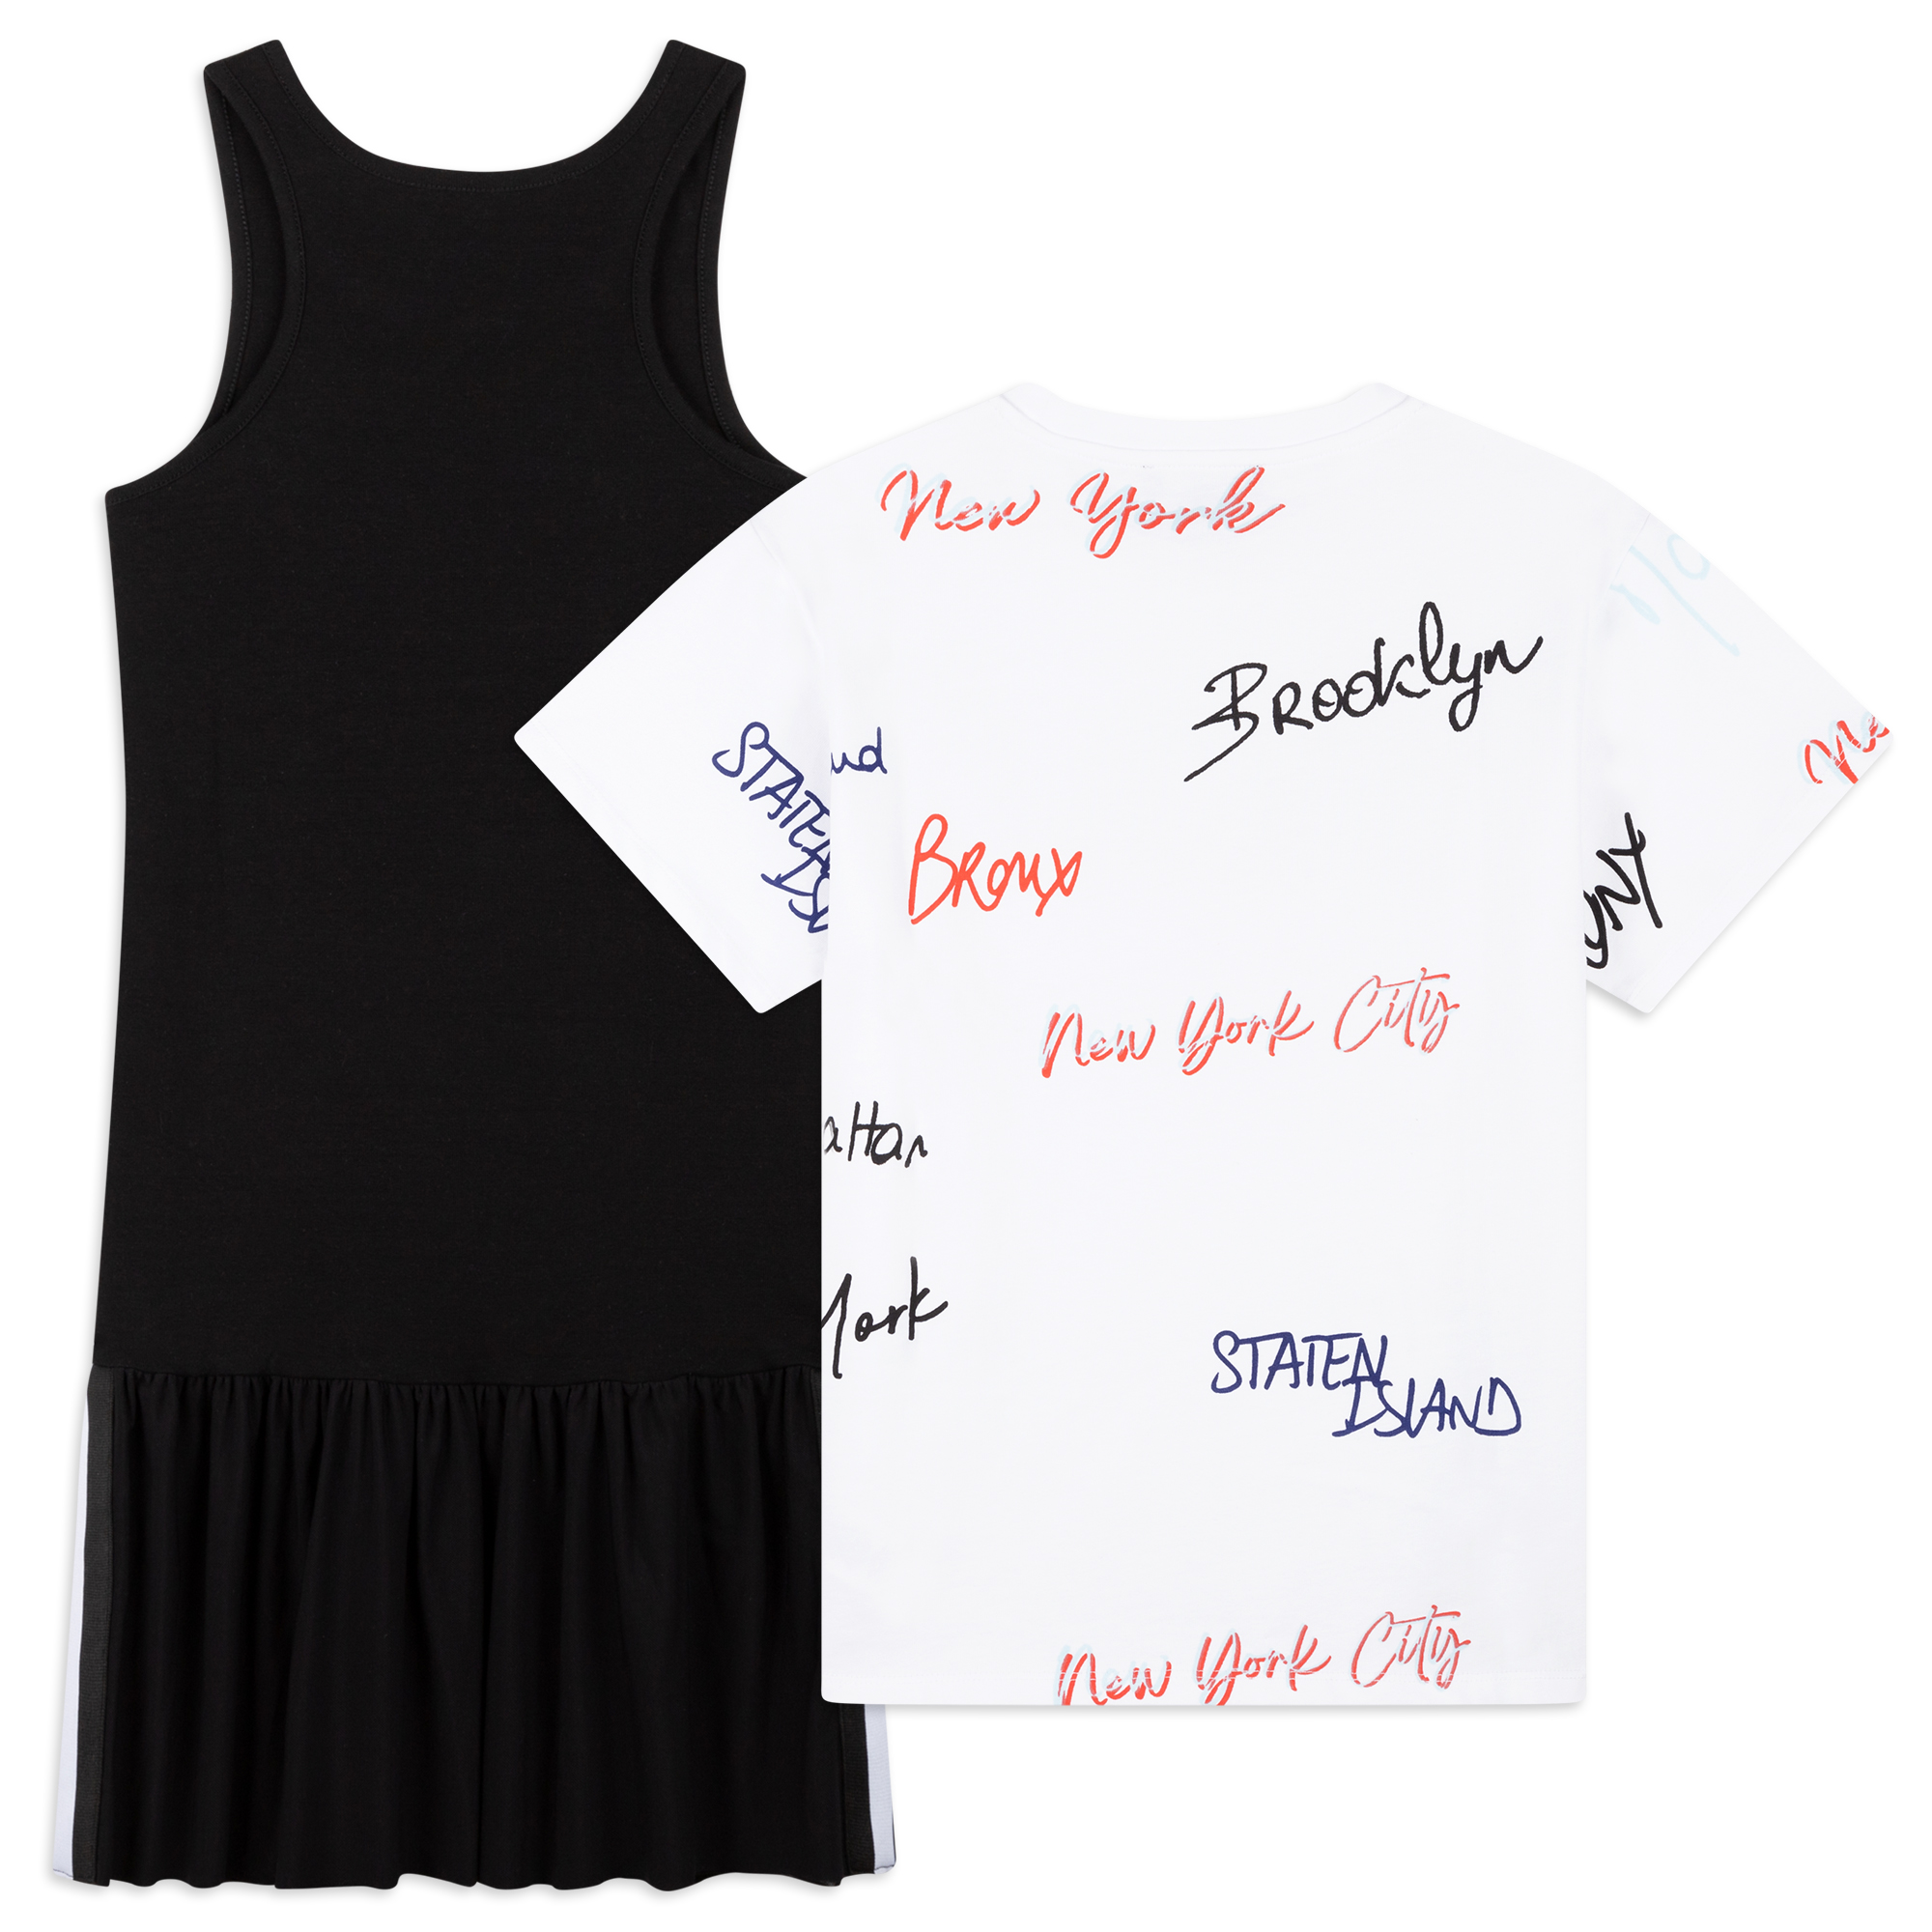 2-in-1 jurk met T-shirt DKNY Voor